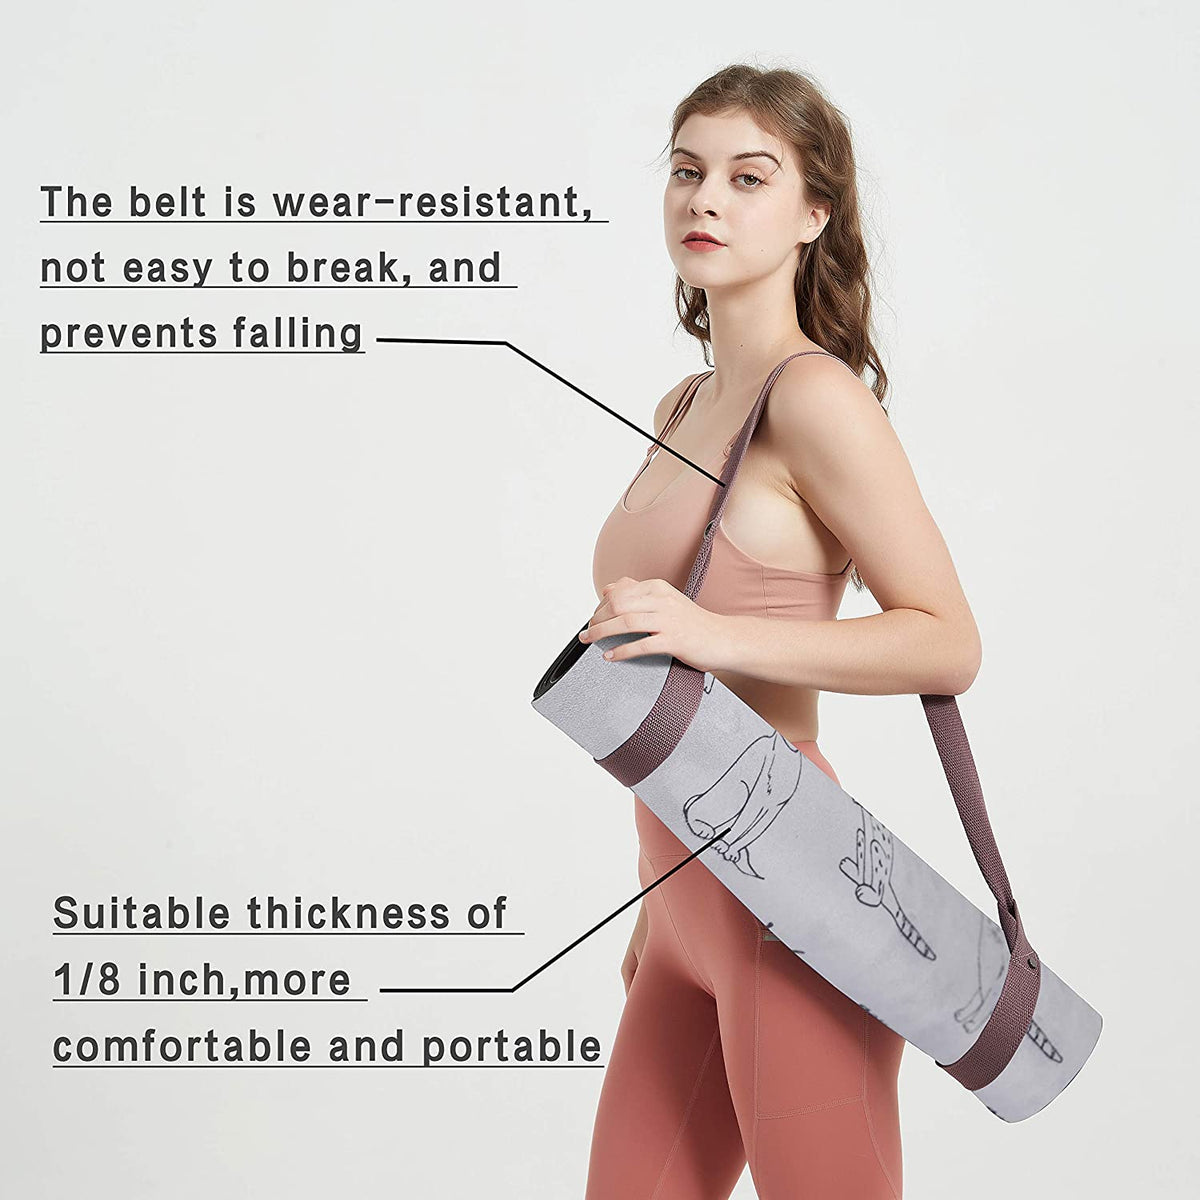 Natural Fitness Yoga Mat, Folding, Roam